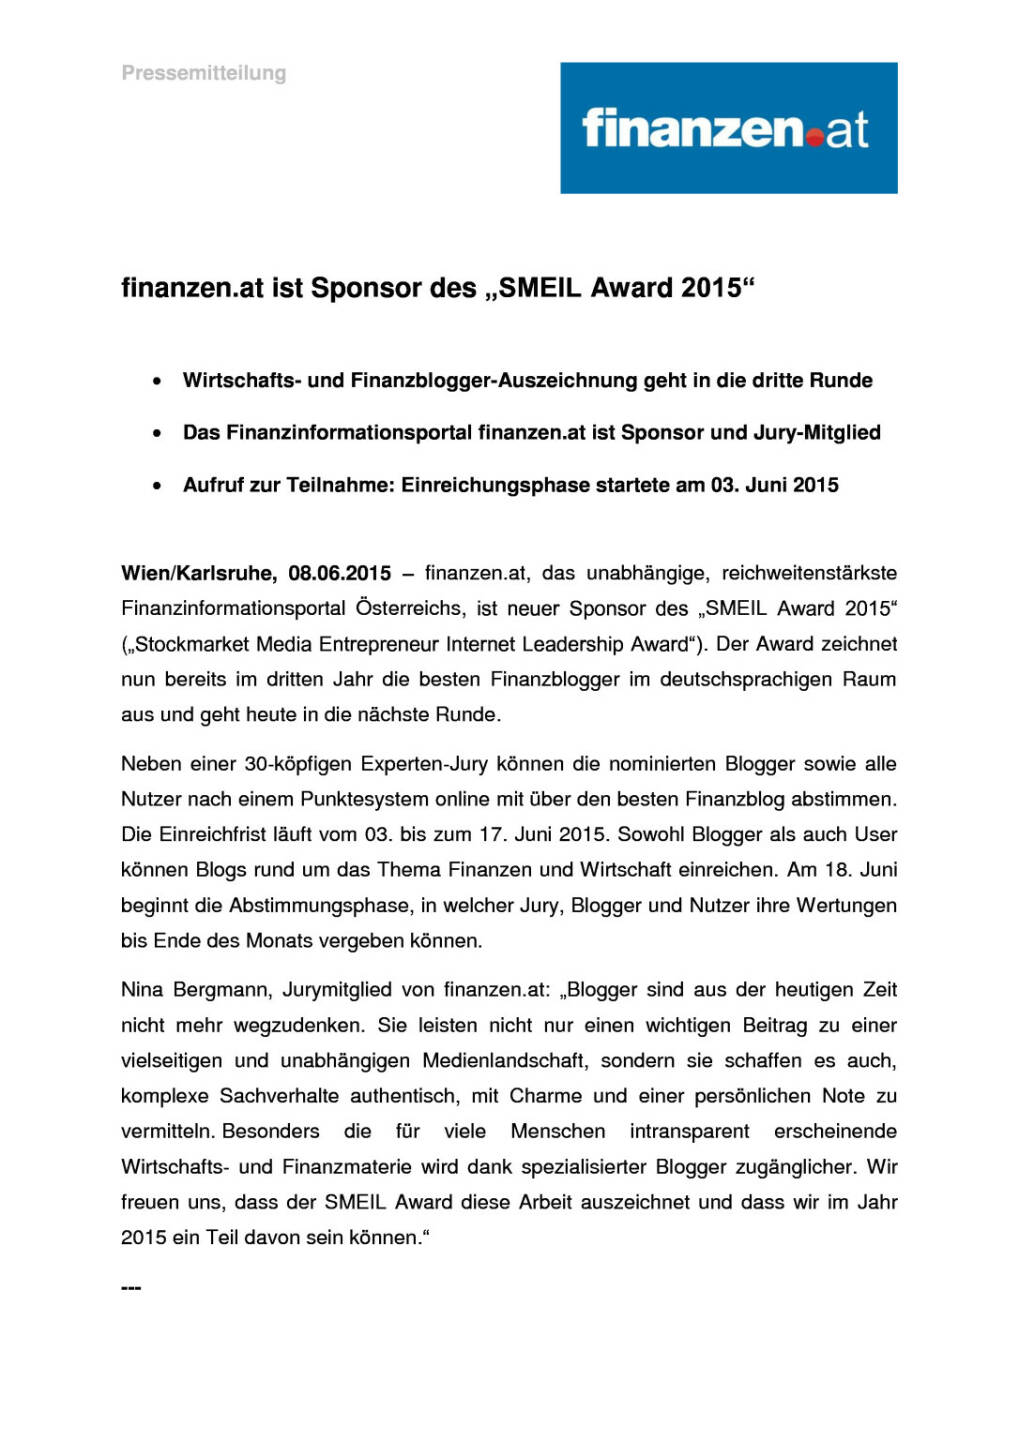 finanzen.at ist Sponsor des Smeil Award 2015, Seite 1/2, komplettes Dokument unter http://boerse-social.com/static/uploads/file_94_smeil_award_finanzenat.pdf